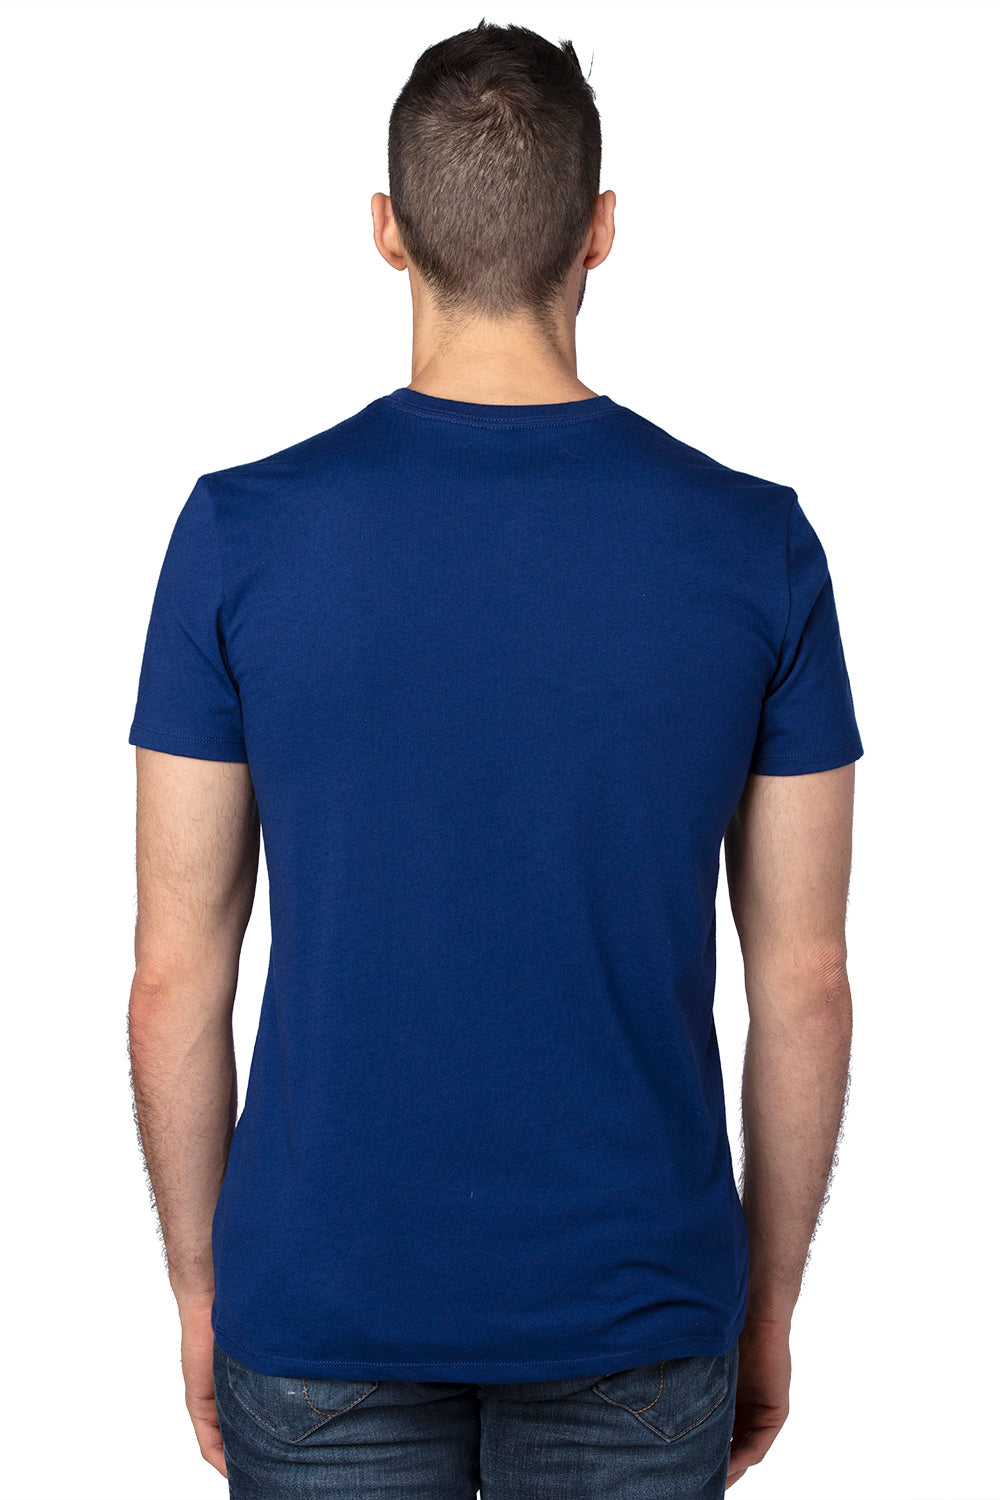 Threadfast Apparel 100A Mens Ultimate Short Sleeve Crewneck T-Shirt Navy Blue Back